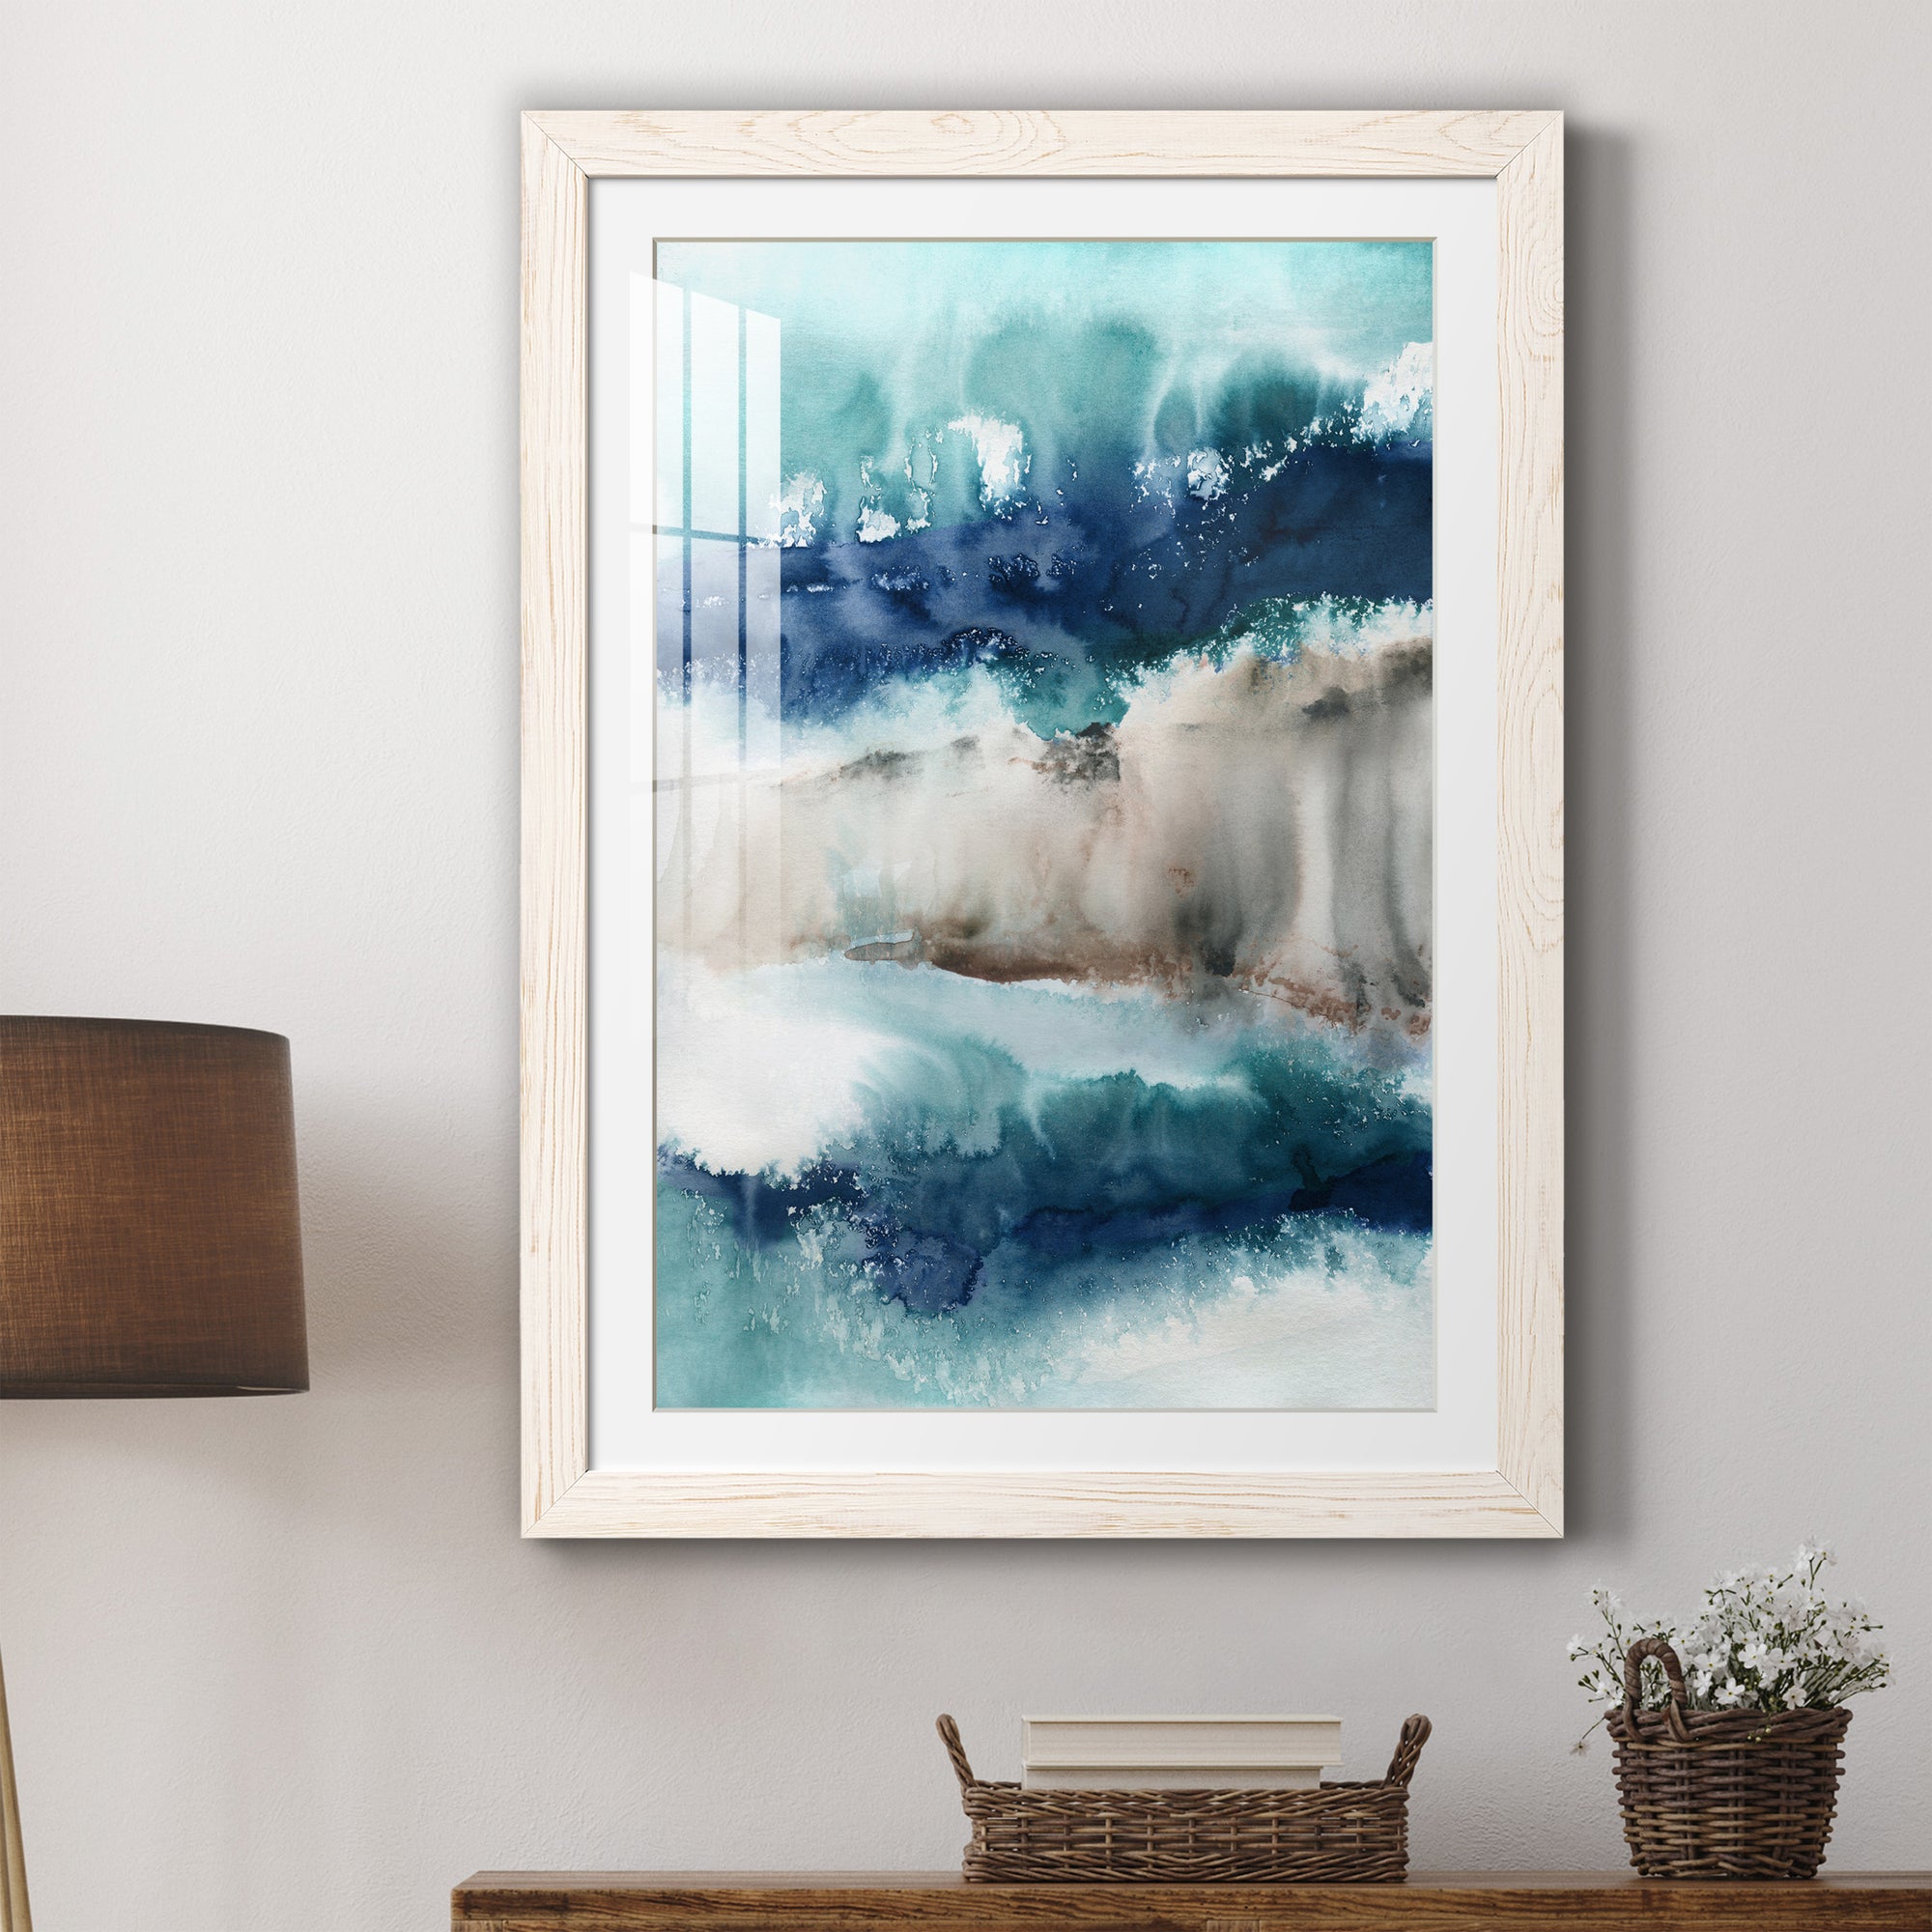 Shifting Sands - Premium Framed Print - Distressed Barnwood Frame - Ready to Hang